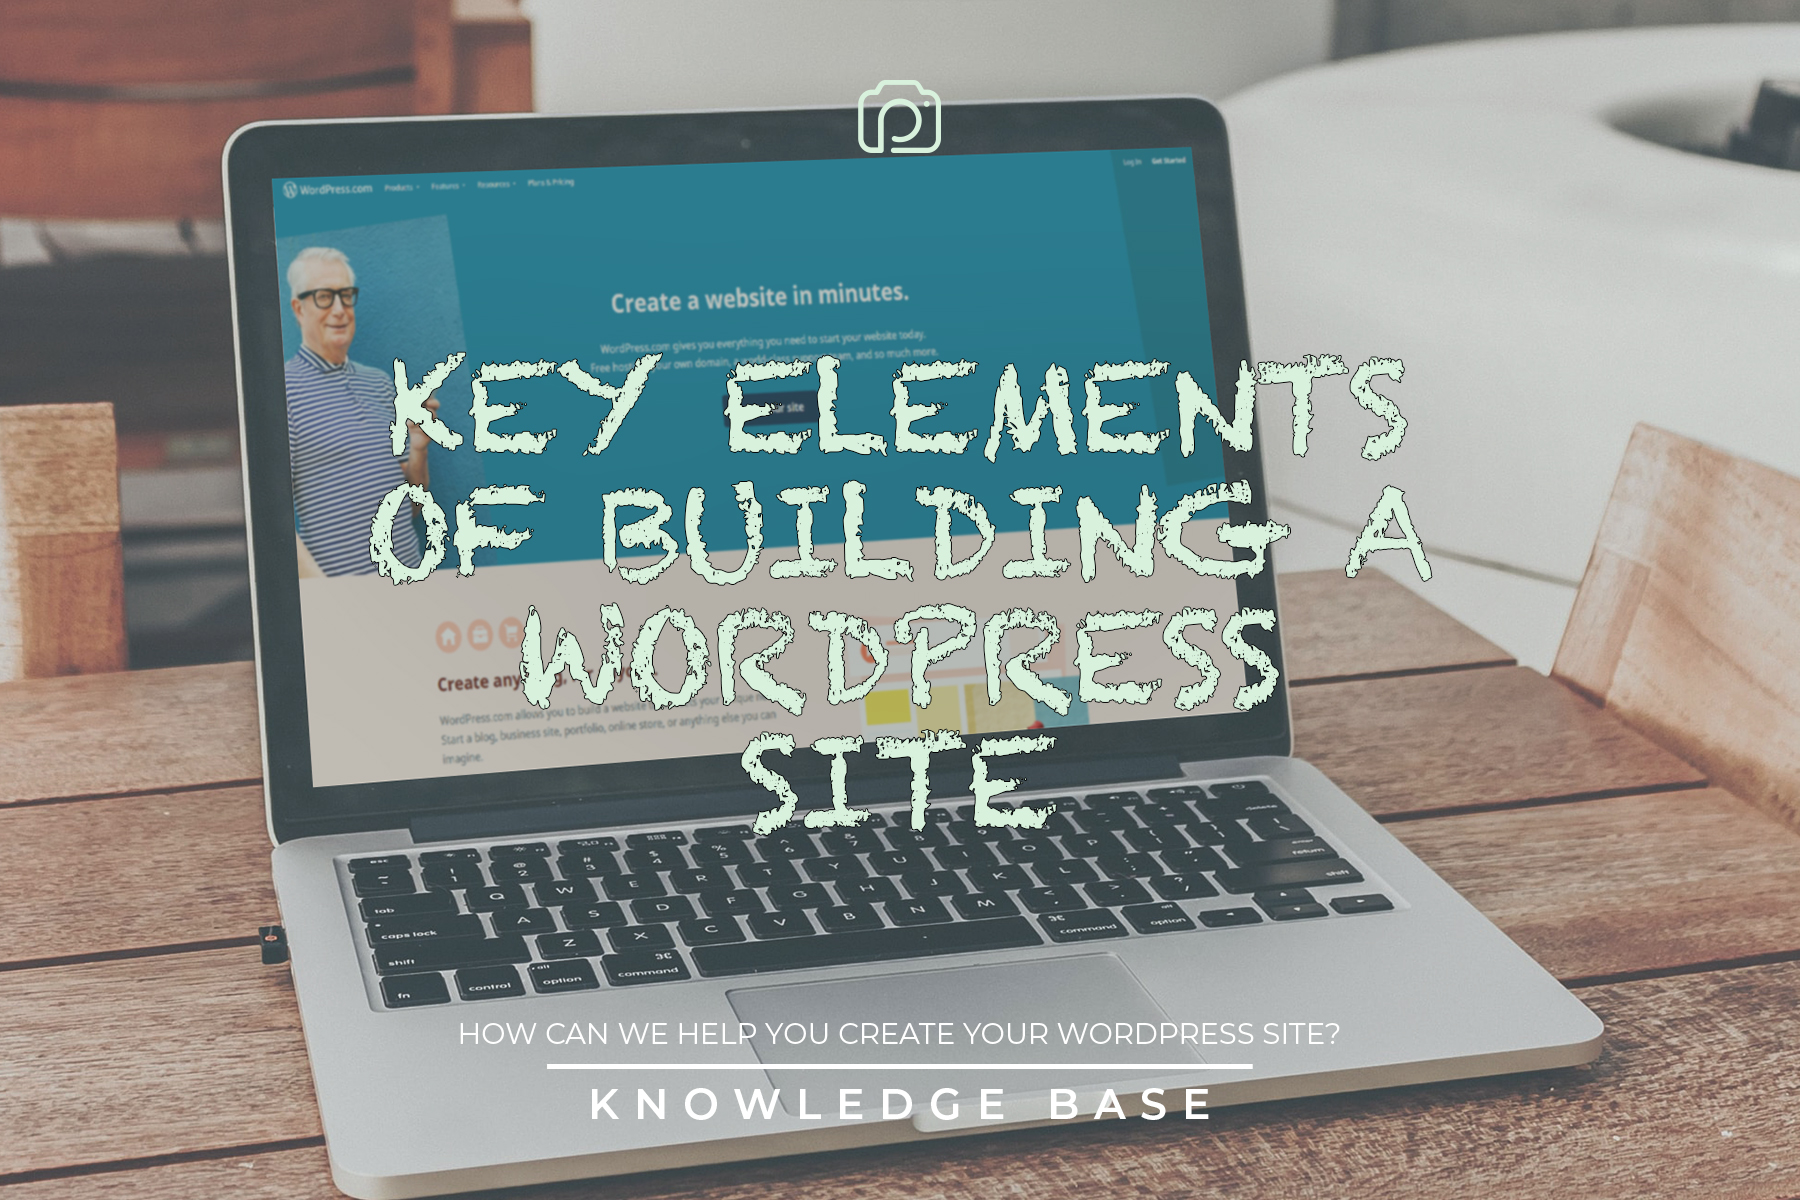 Key elements of building a WordPress site